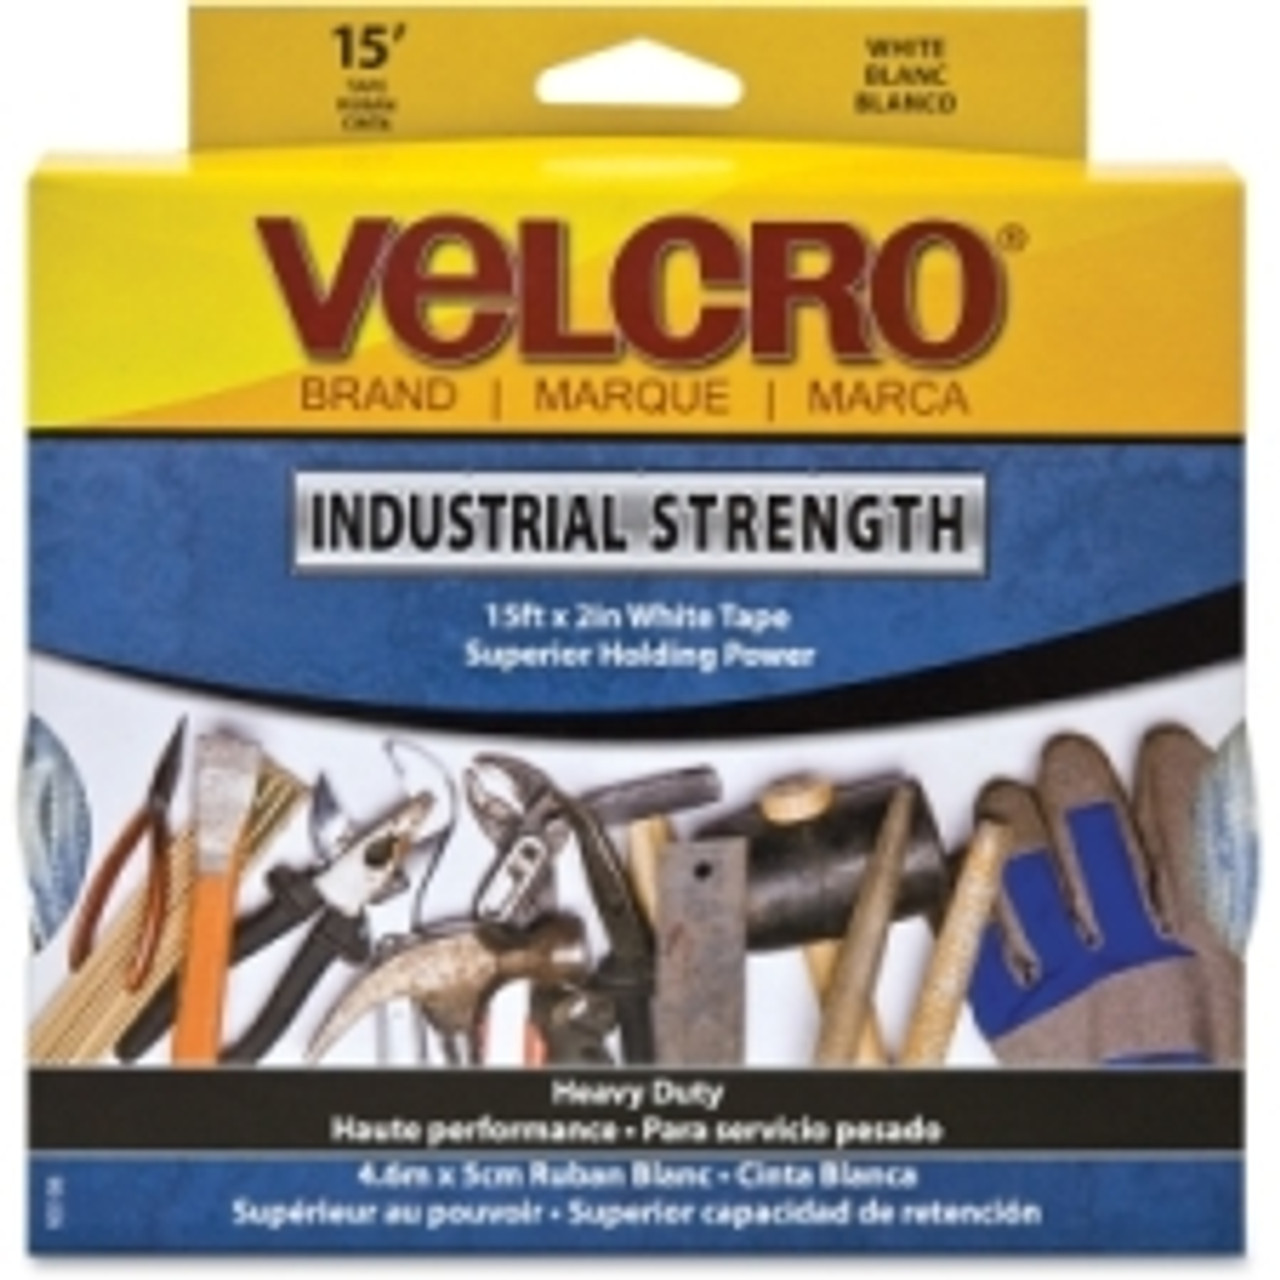  VELCRO Brand - Industrial Strength